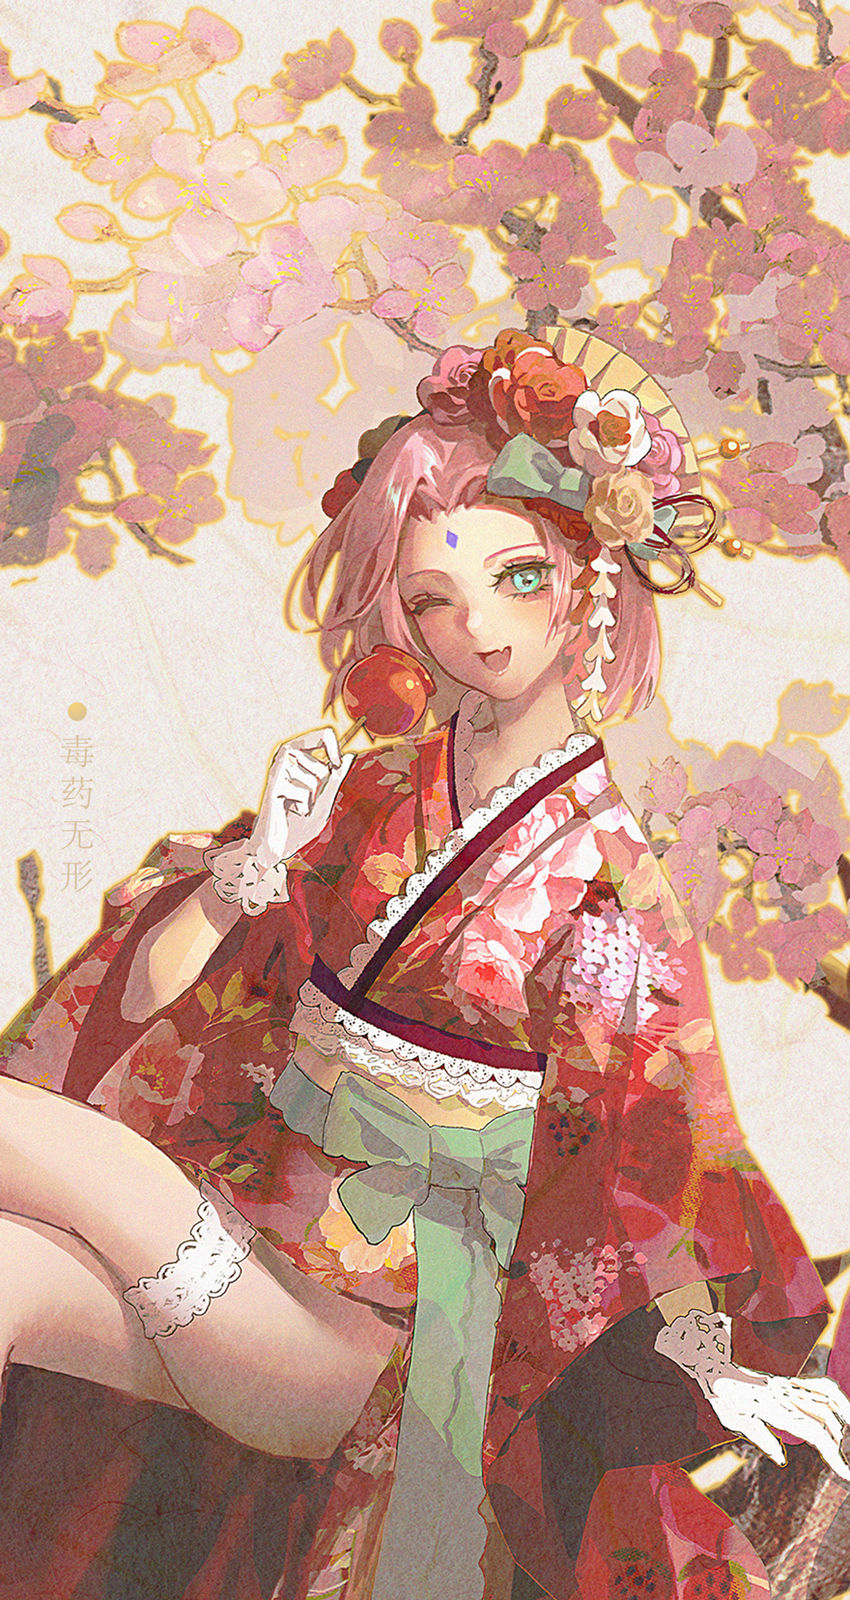 Sakura插画图片壁纸